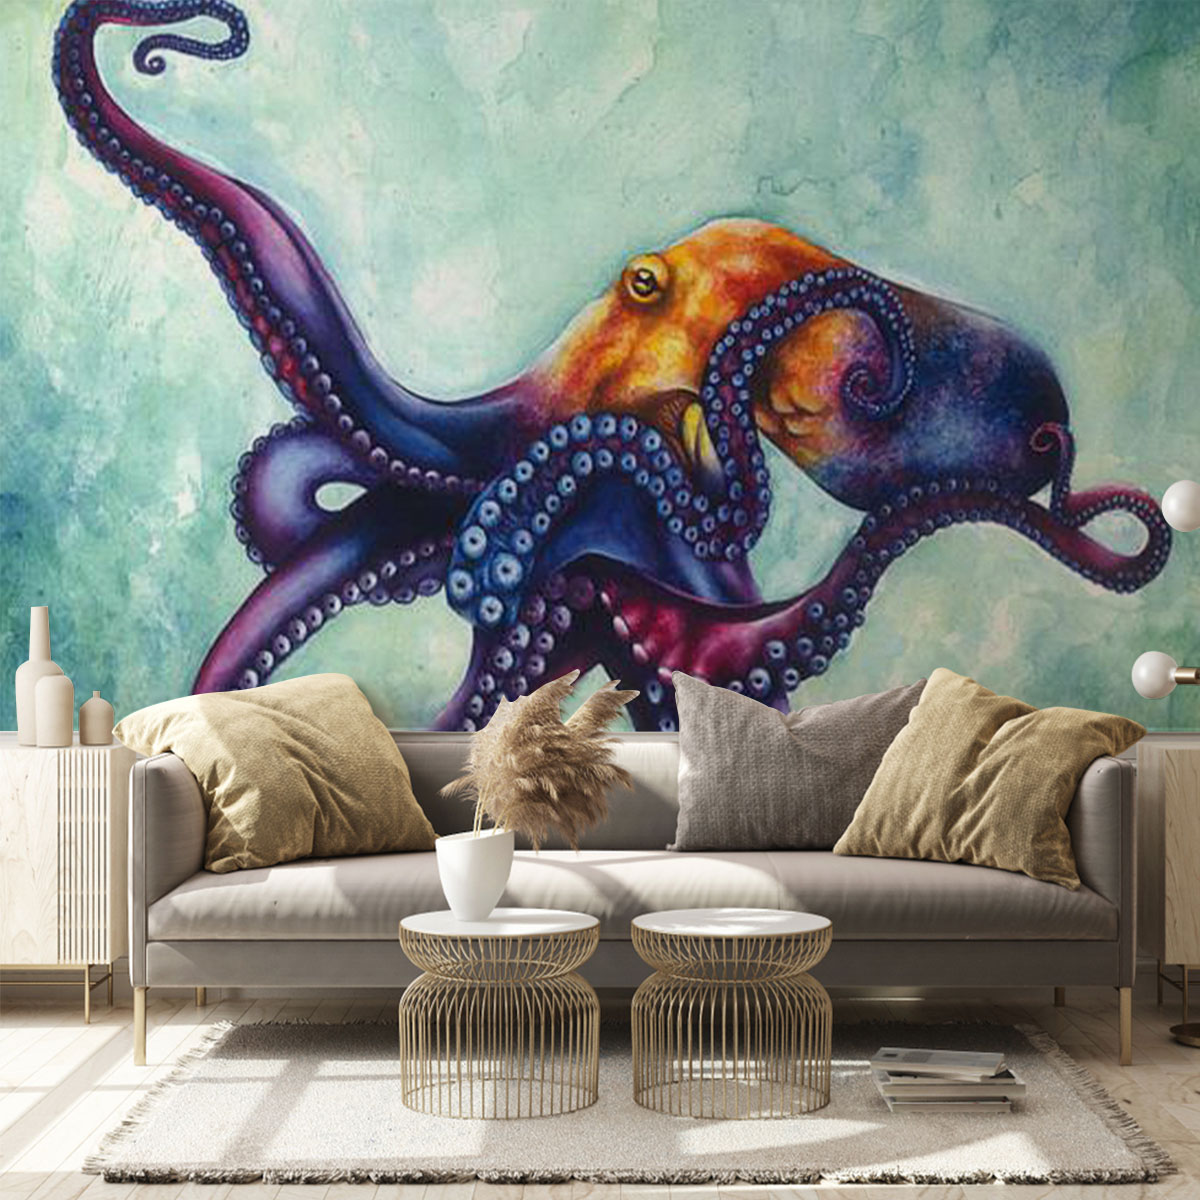 Rainbow Octopus Wall Mural